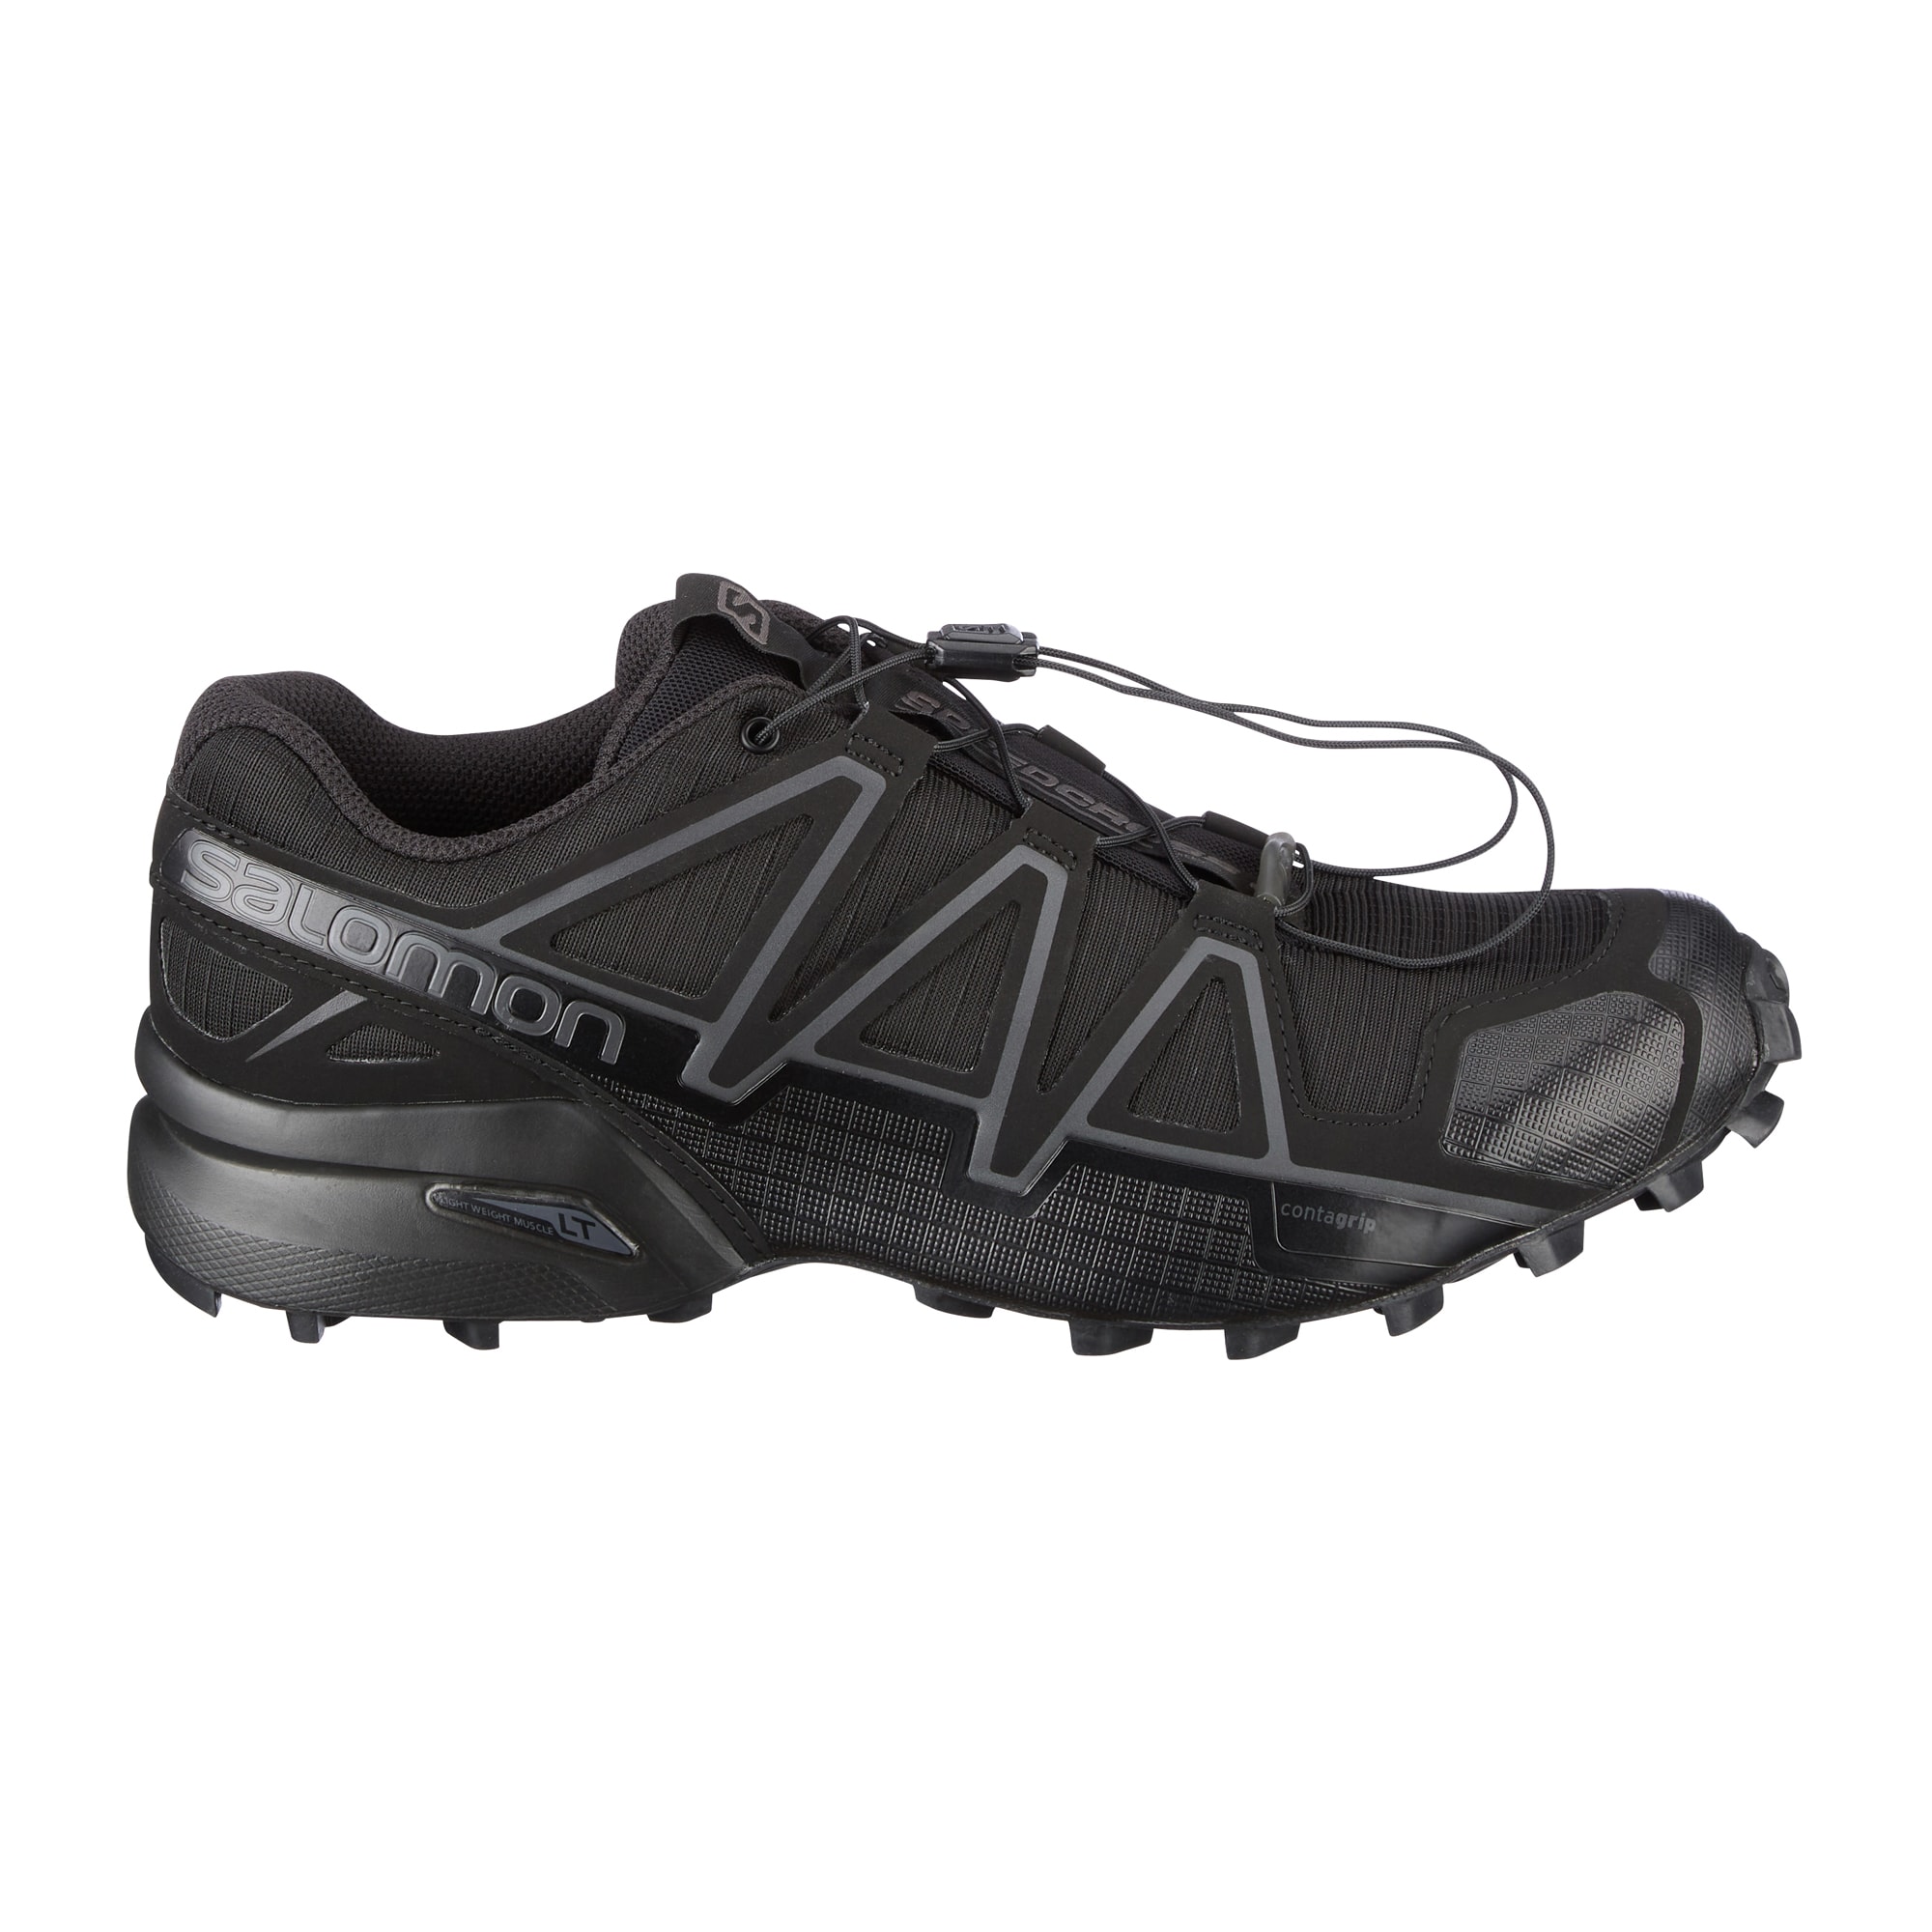 Purchase the Salomon Shoe Speedcross Wide Forces black by ASMC